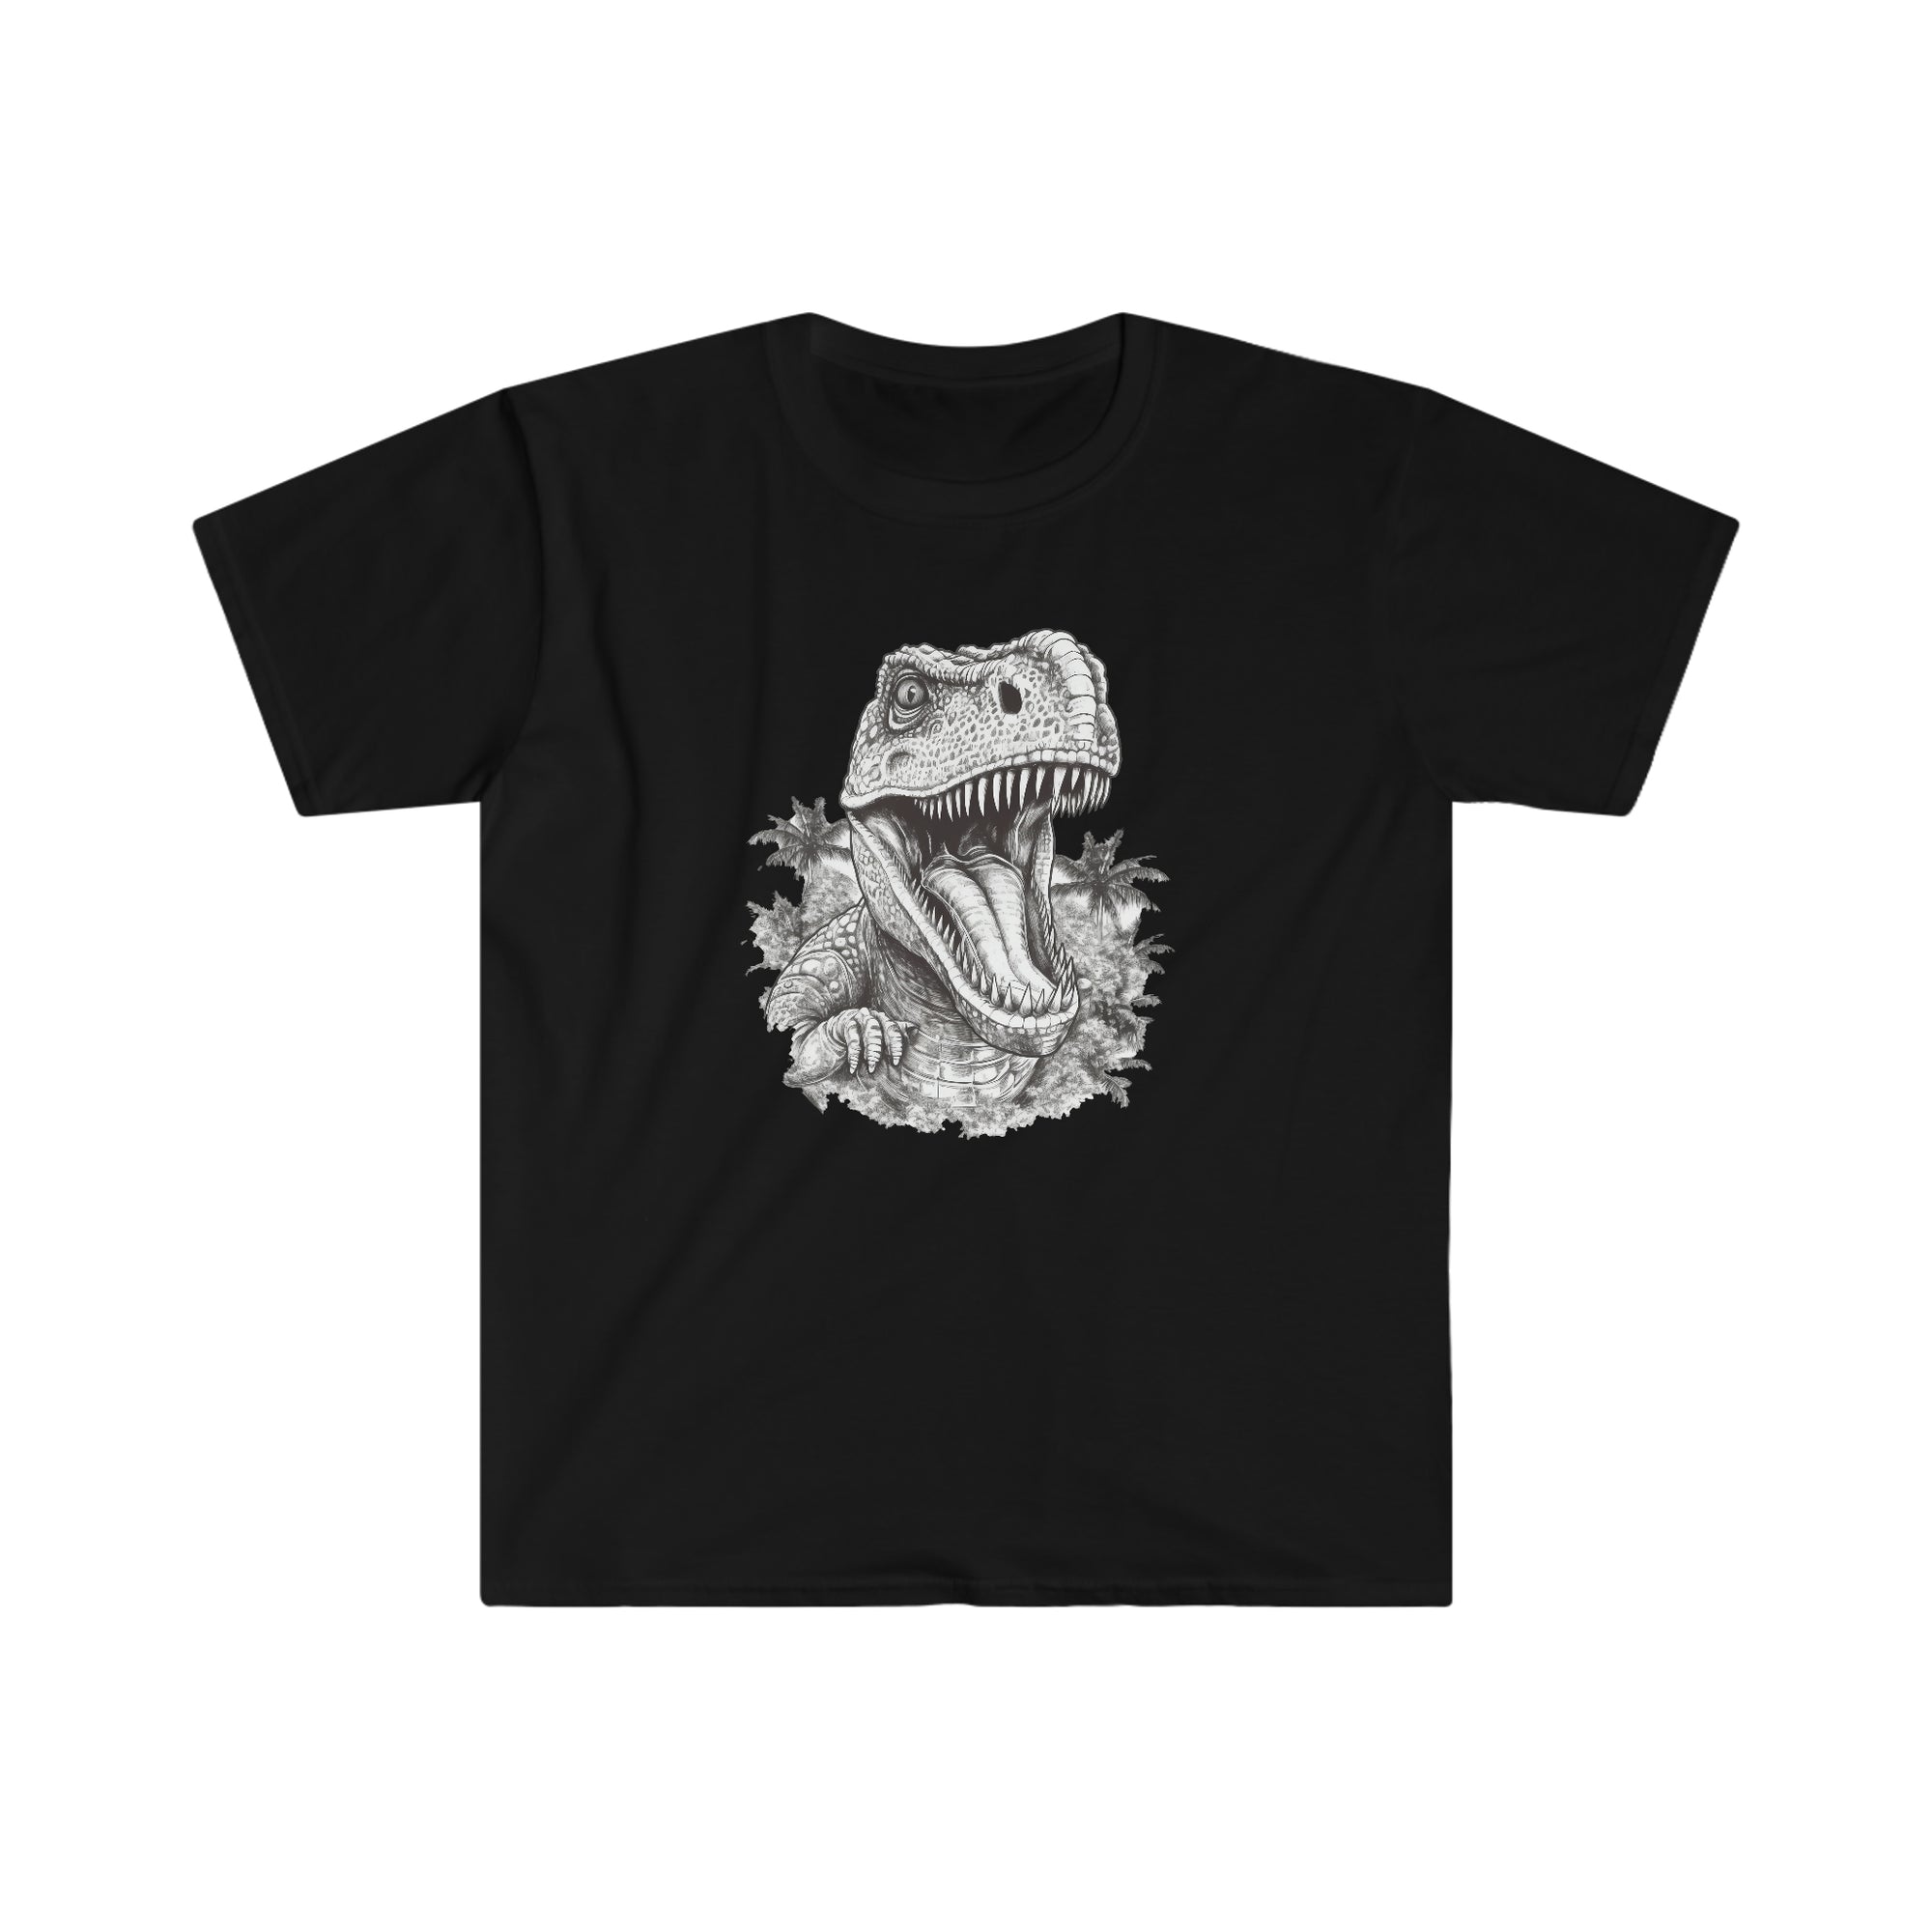 Silhouette Scream: Black and White Dinosaur Shirt